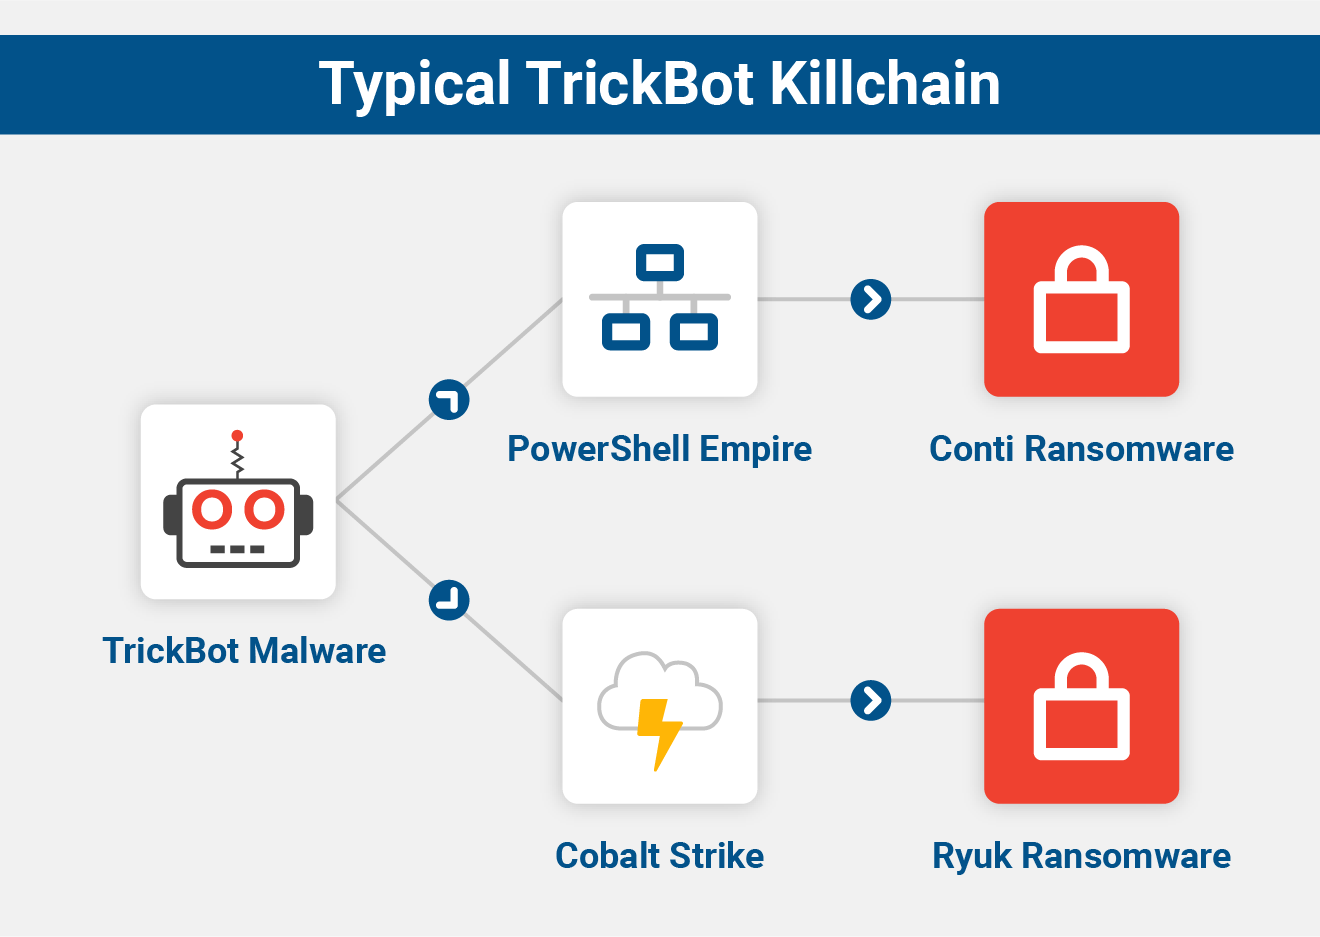 TrickBot malware killchain to Conti and Ryuk ransomware